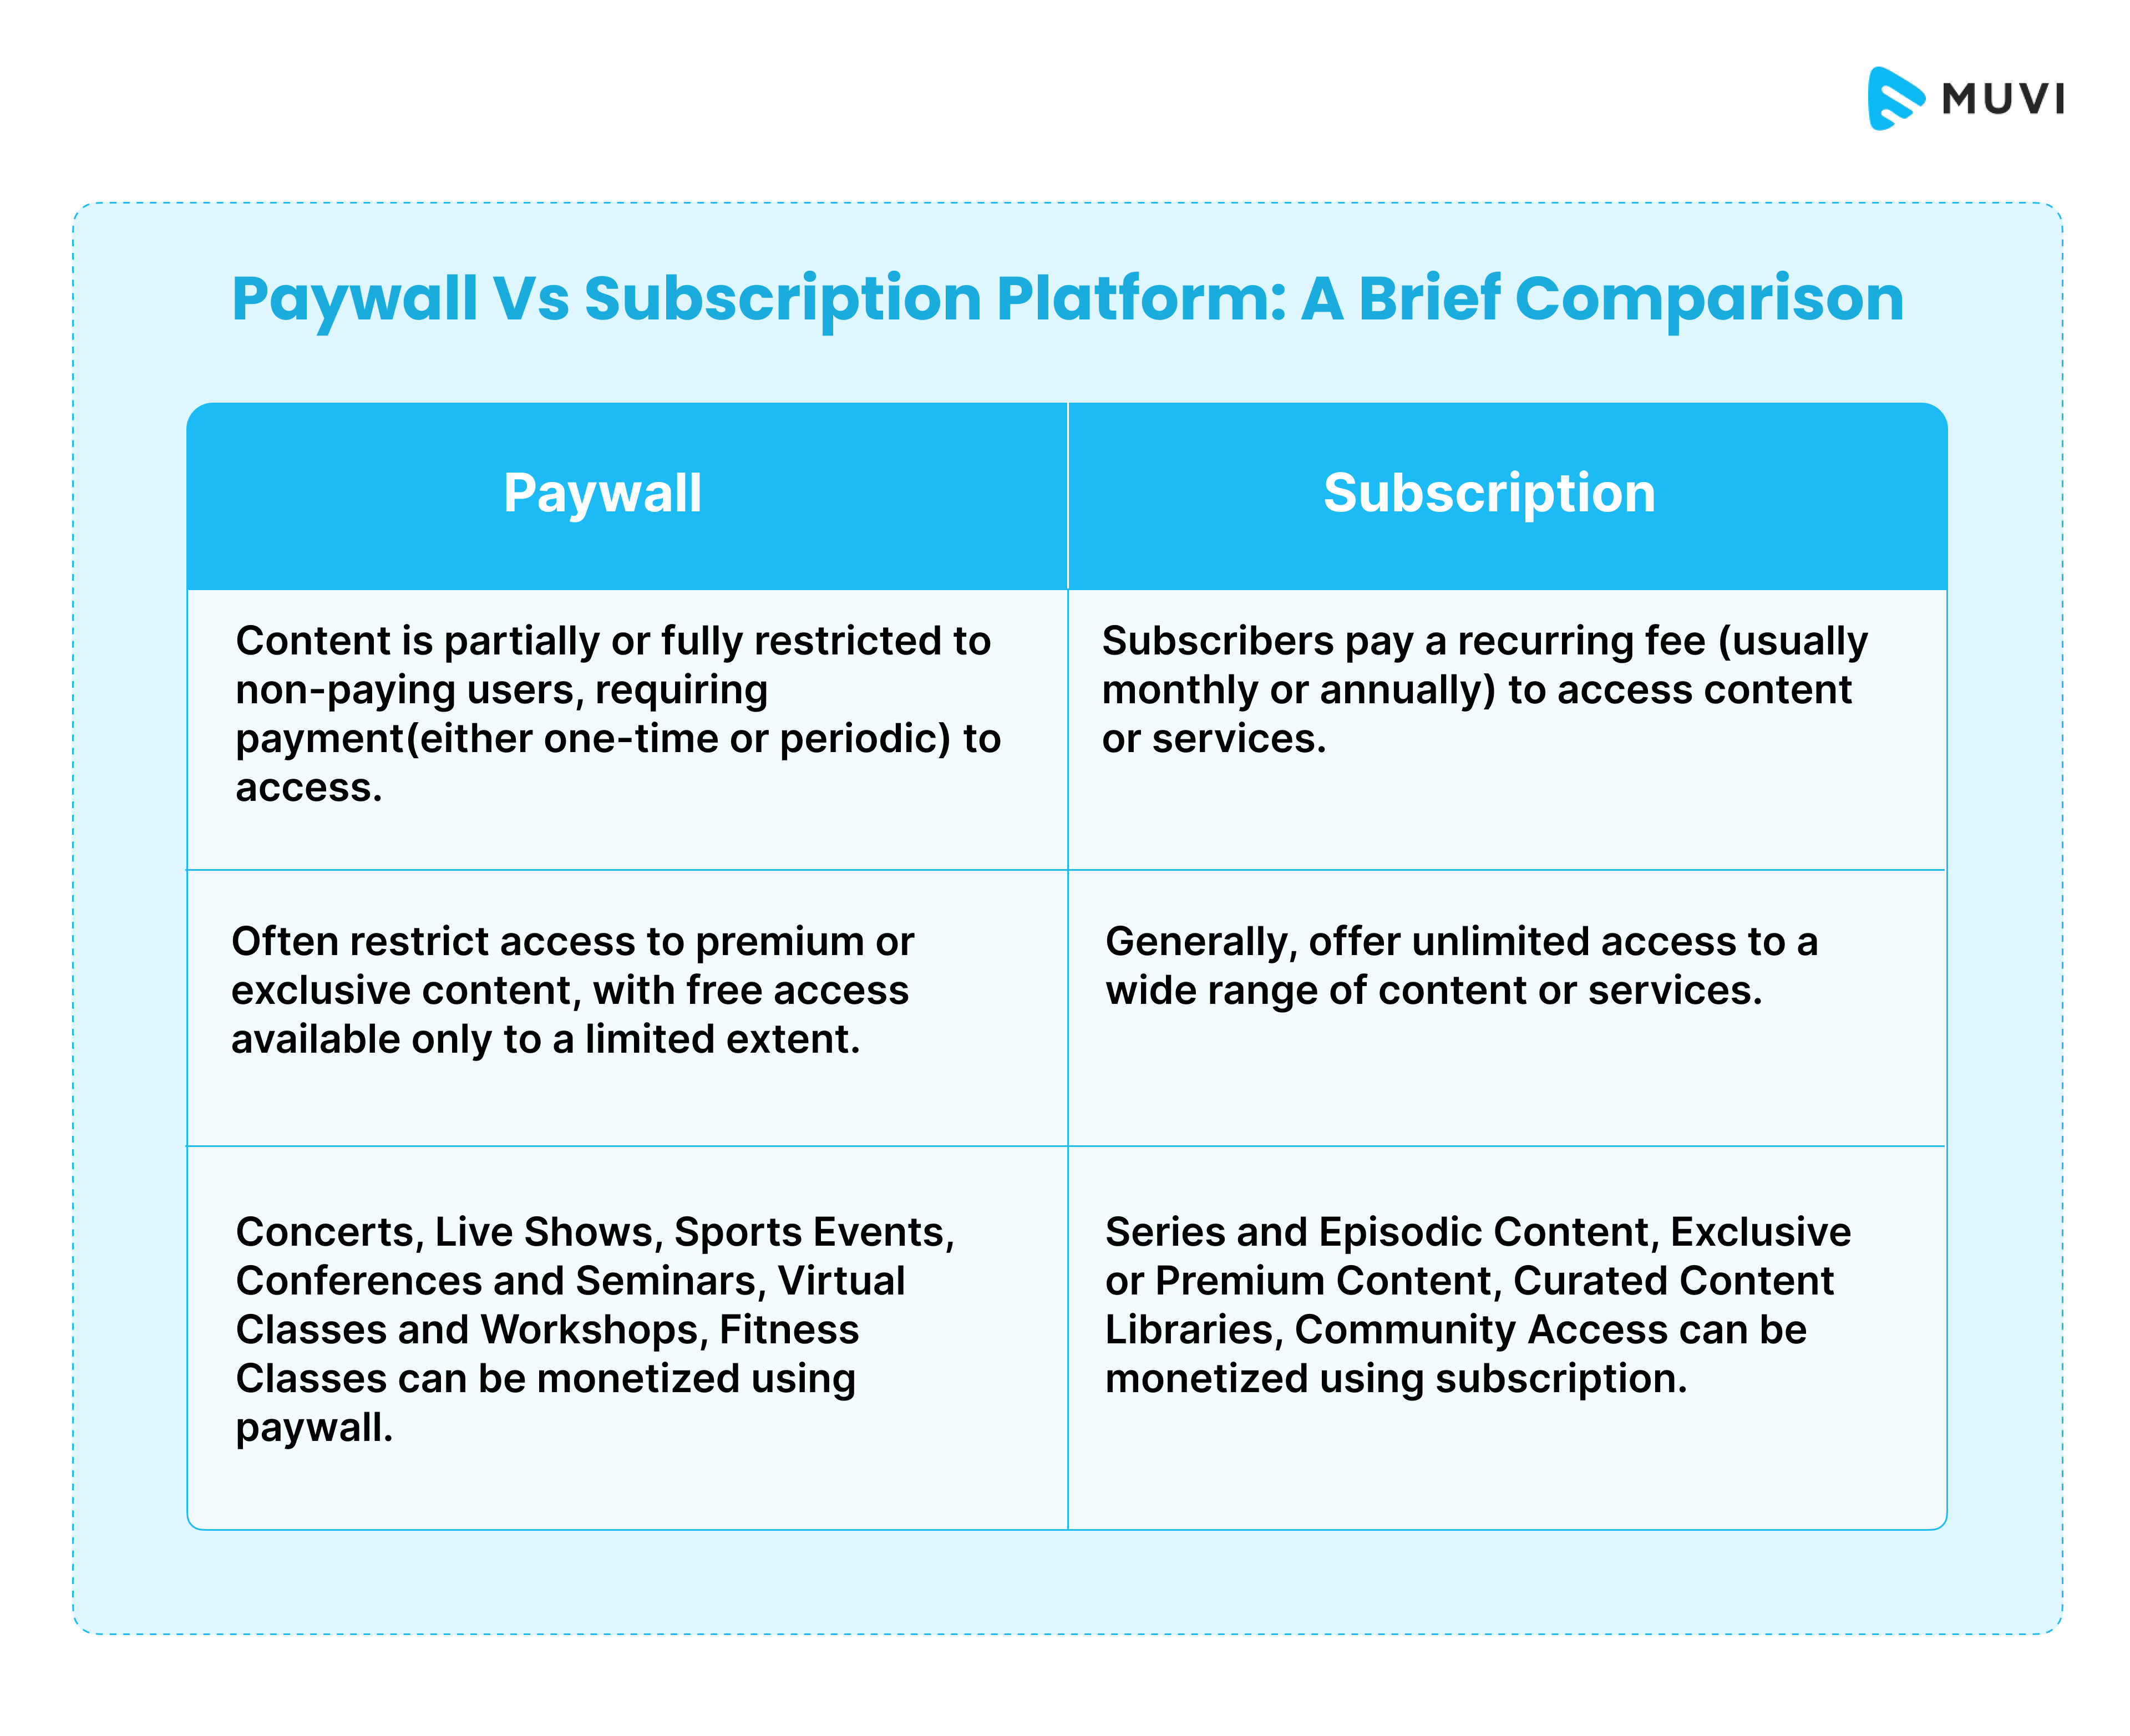 Paywall vs Subscription